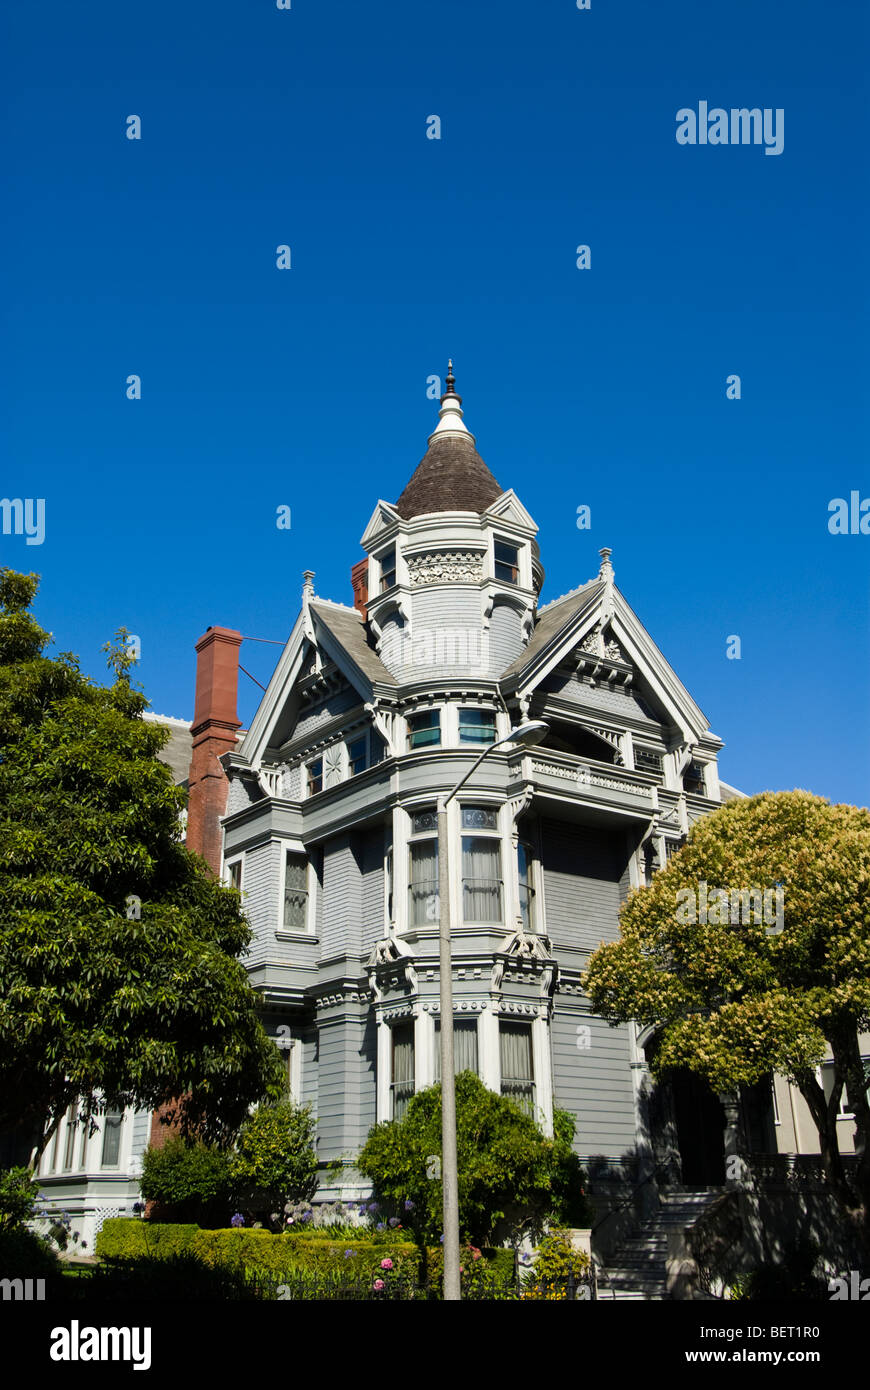 Californie : San Francisco. Haas-Lilienthal house victorienne. Photo copyright Lee Foster. Photo #  : 22-casanf83869 Banque D'Images